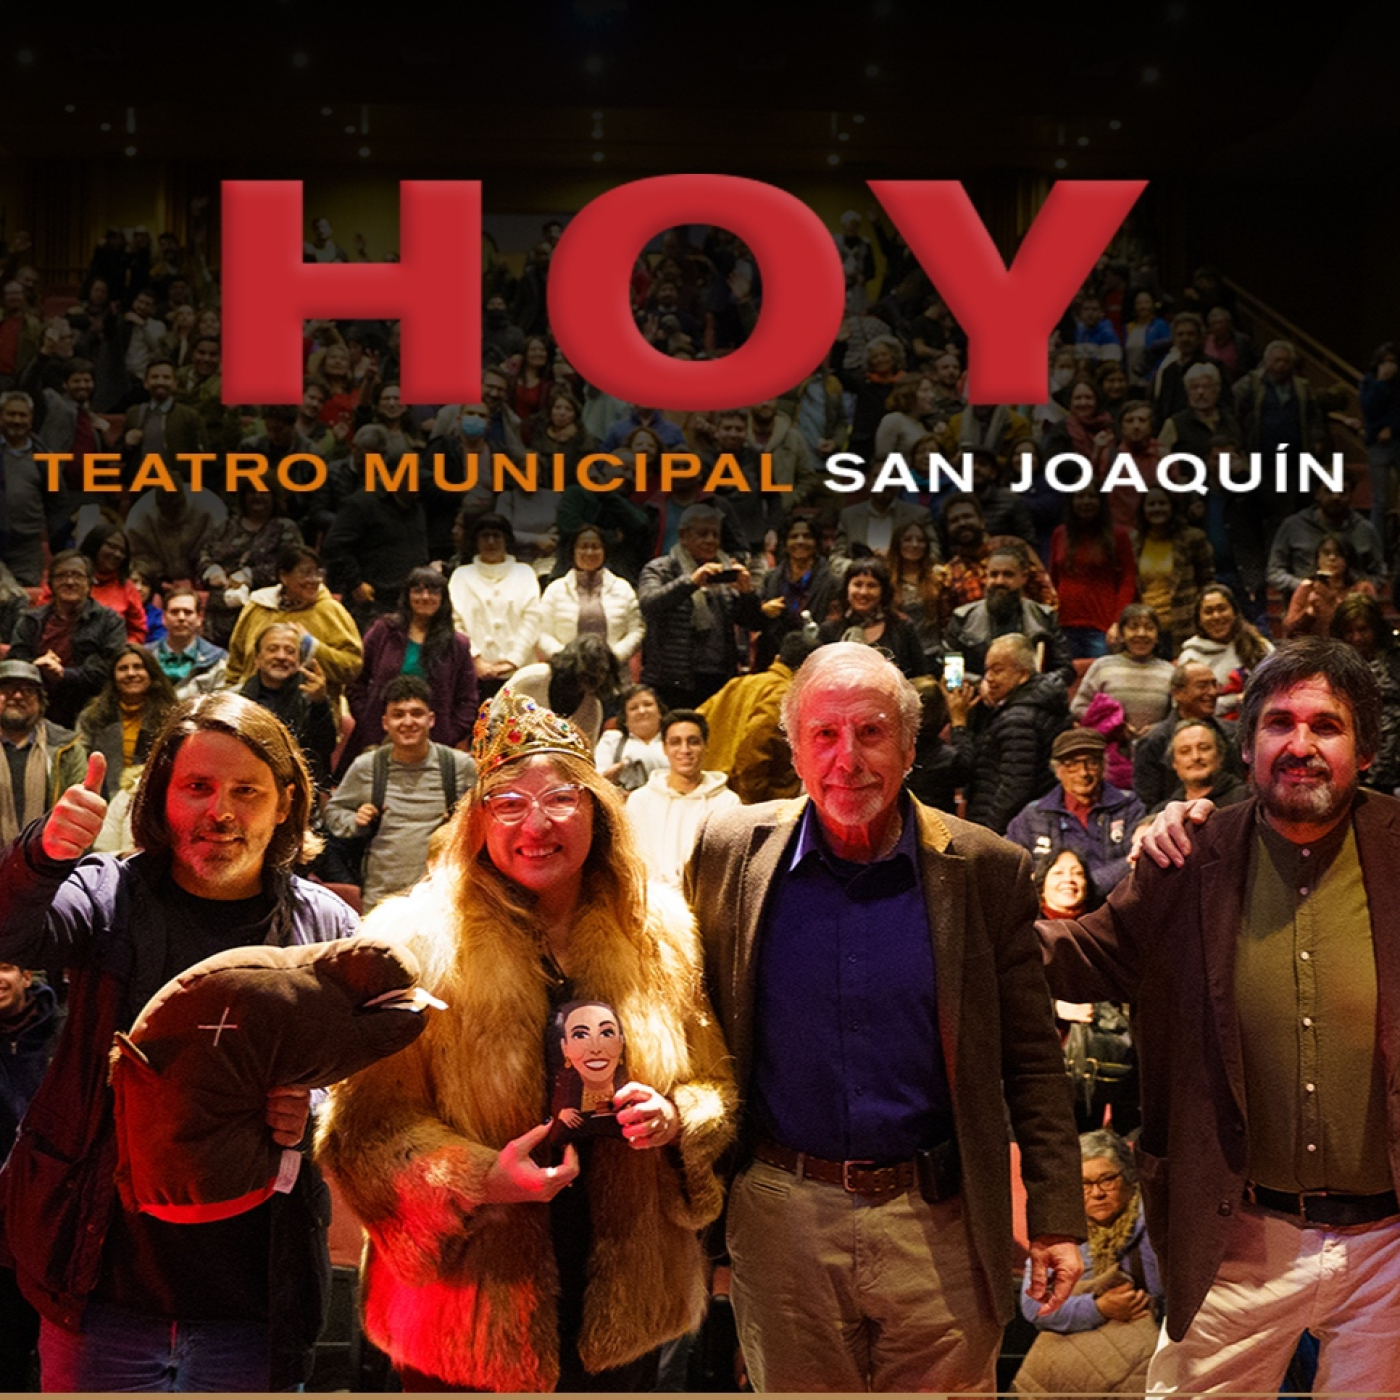 La Cosa Nostra - En Vivo - Teatro Municipal San Joaquín